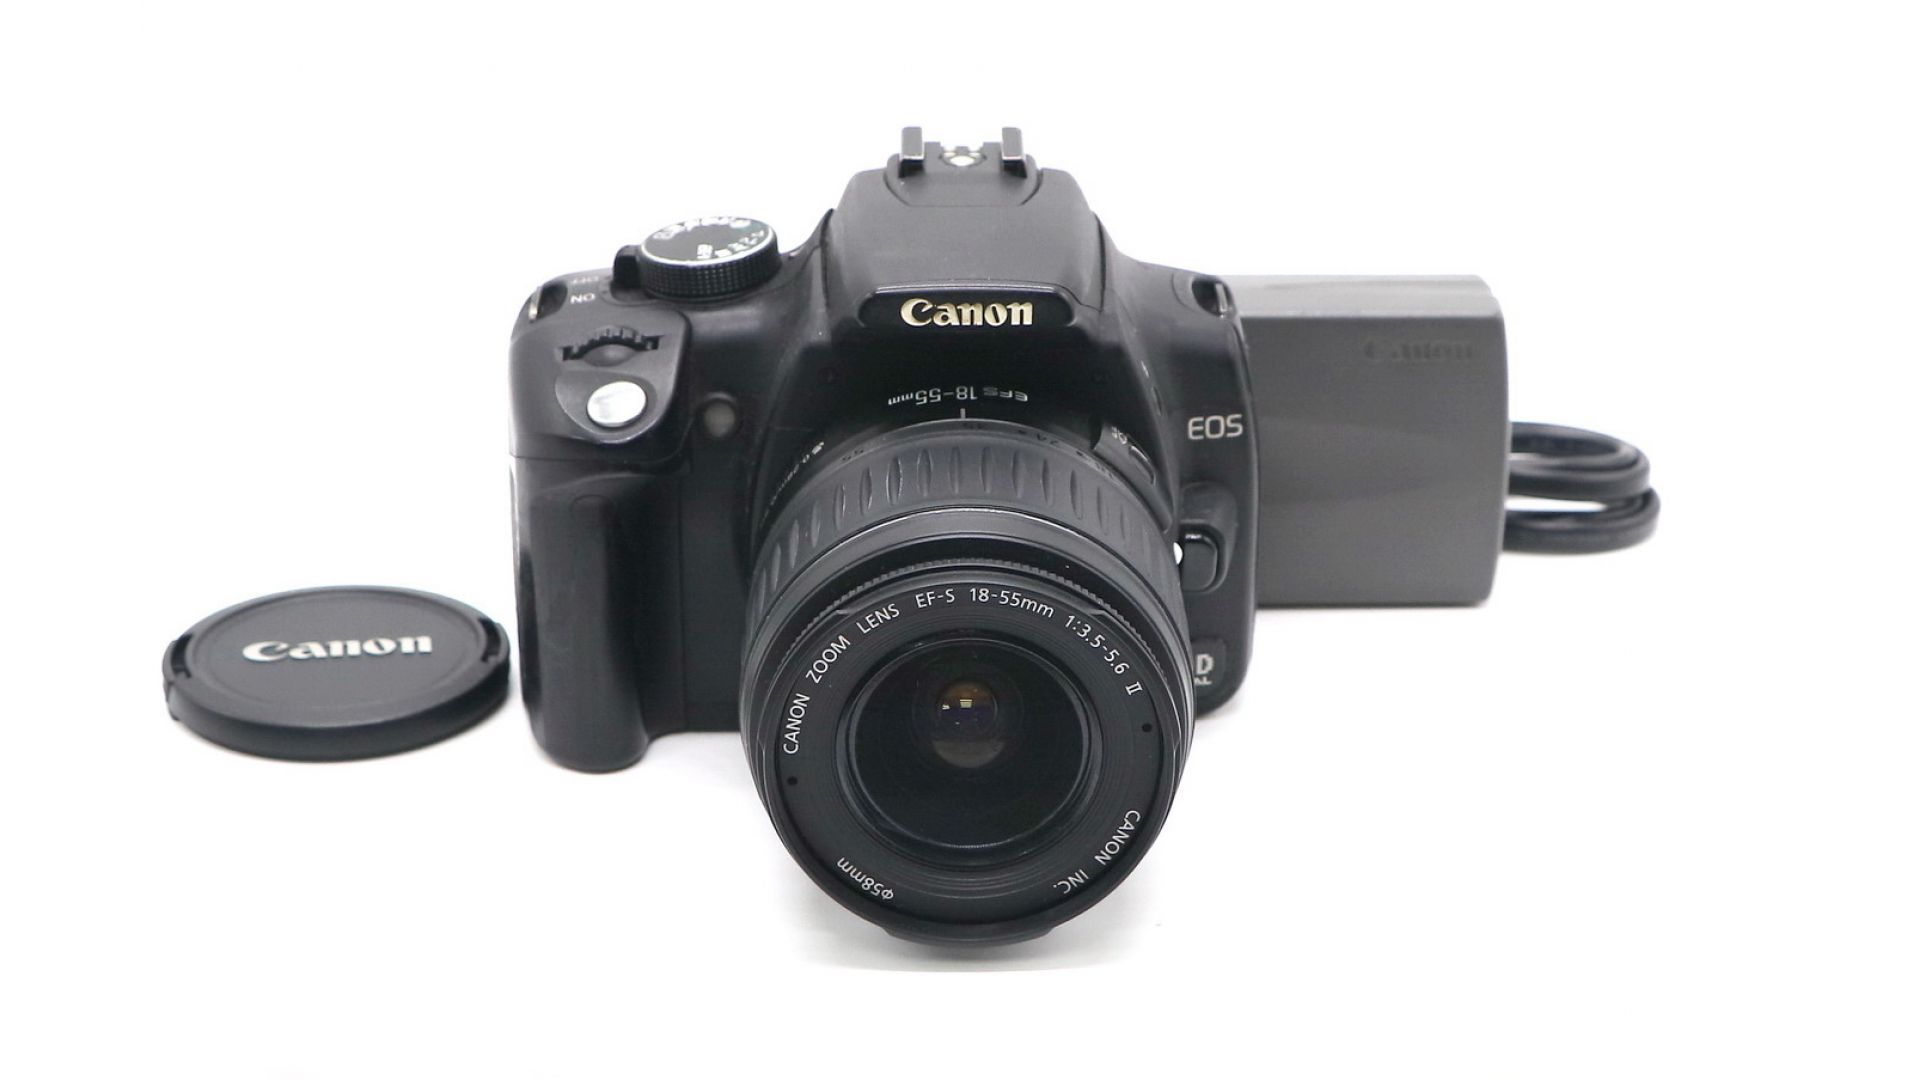 Canon eos 350d. Canon EOS 350d in hands.